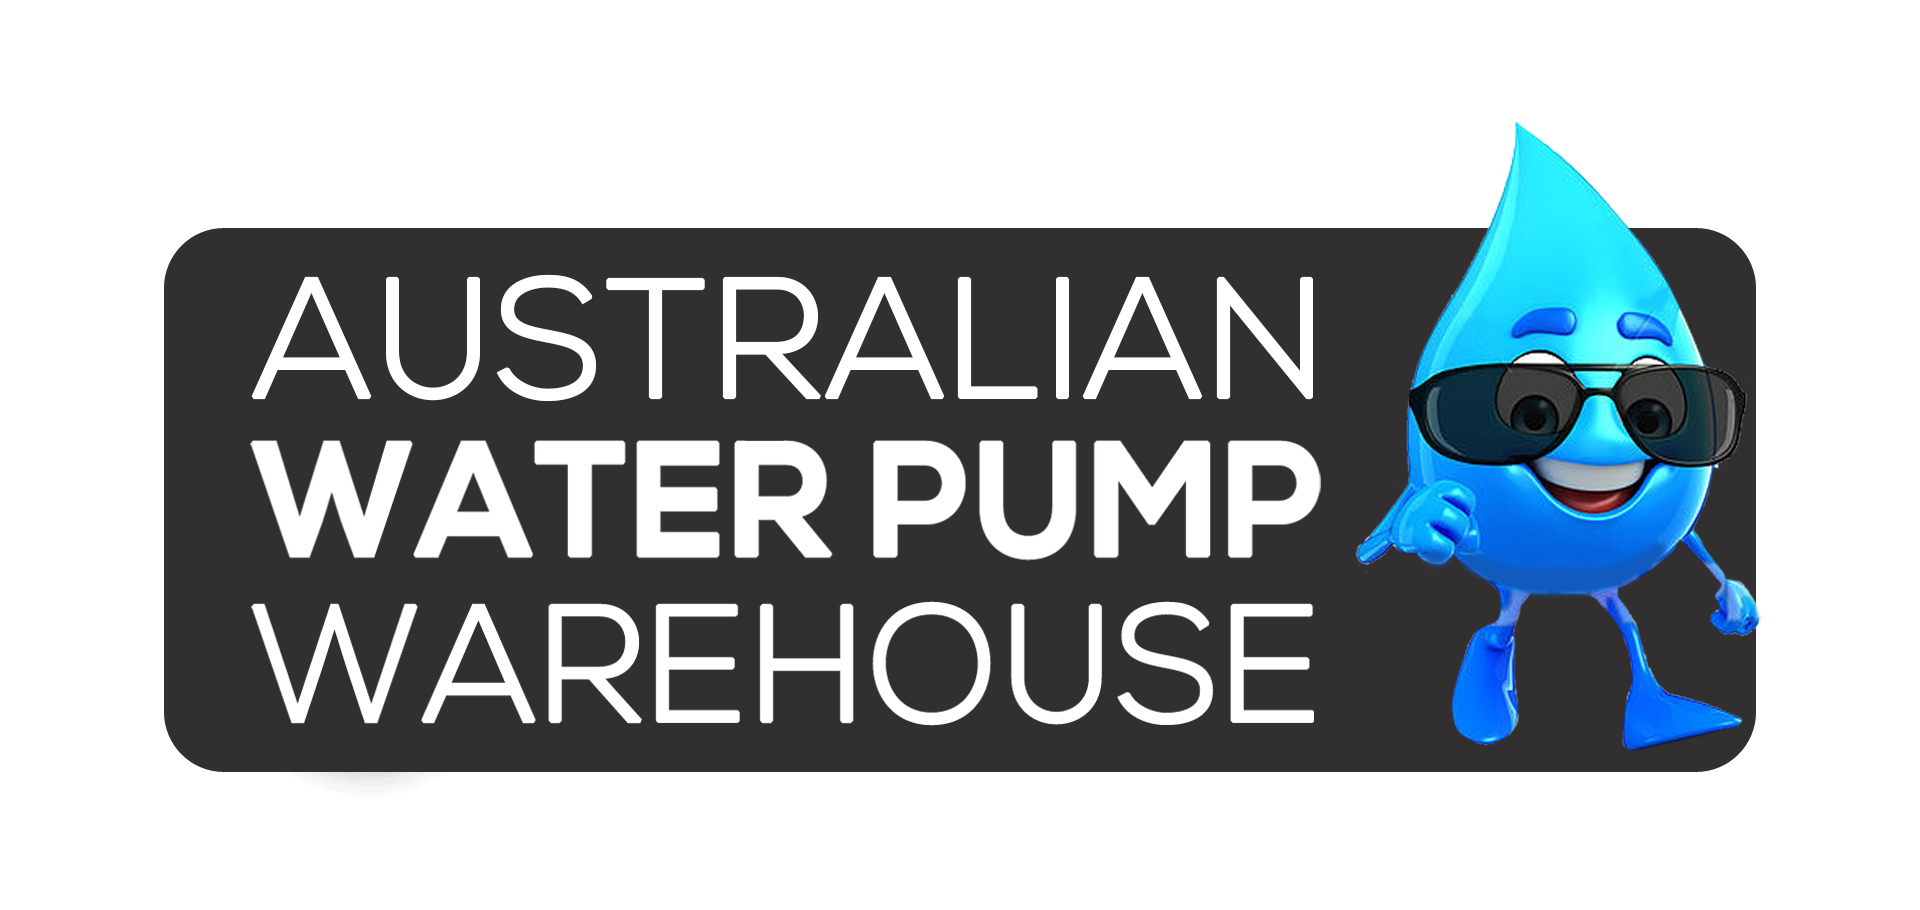 Auto Peripheral Water Pump Clean Electric Garden Farm Rain Tank Irrigation  QB60 Yellow 2,100L/H 35m Lift